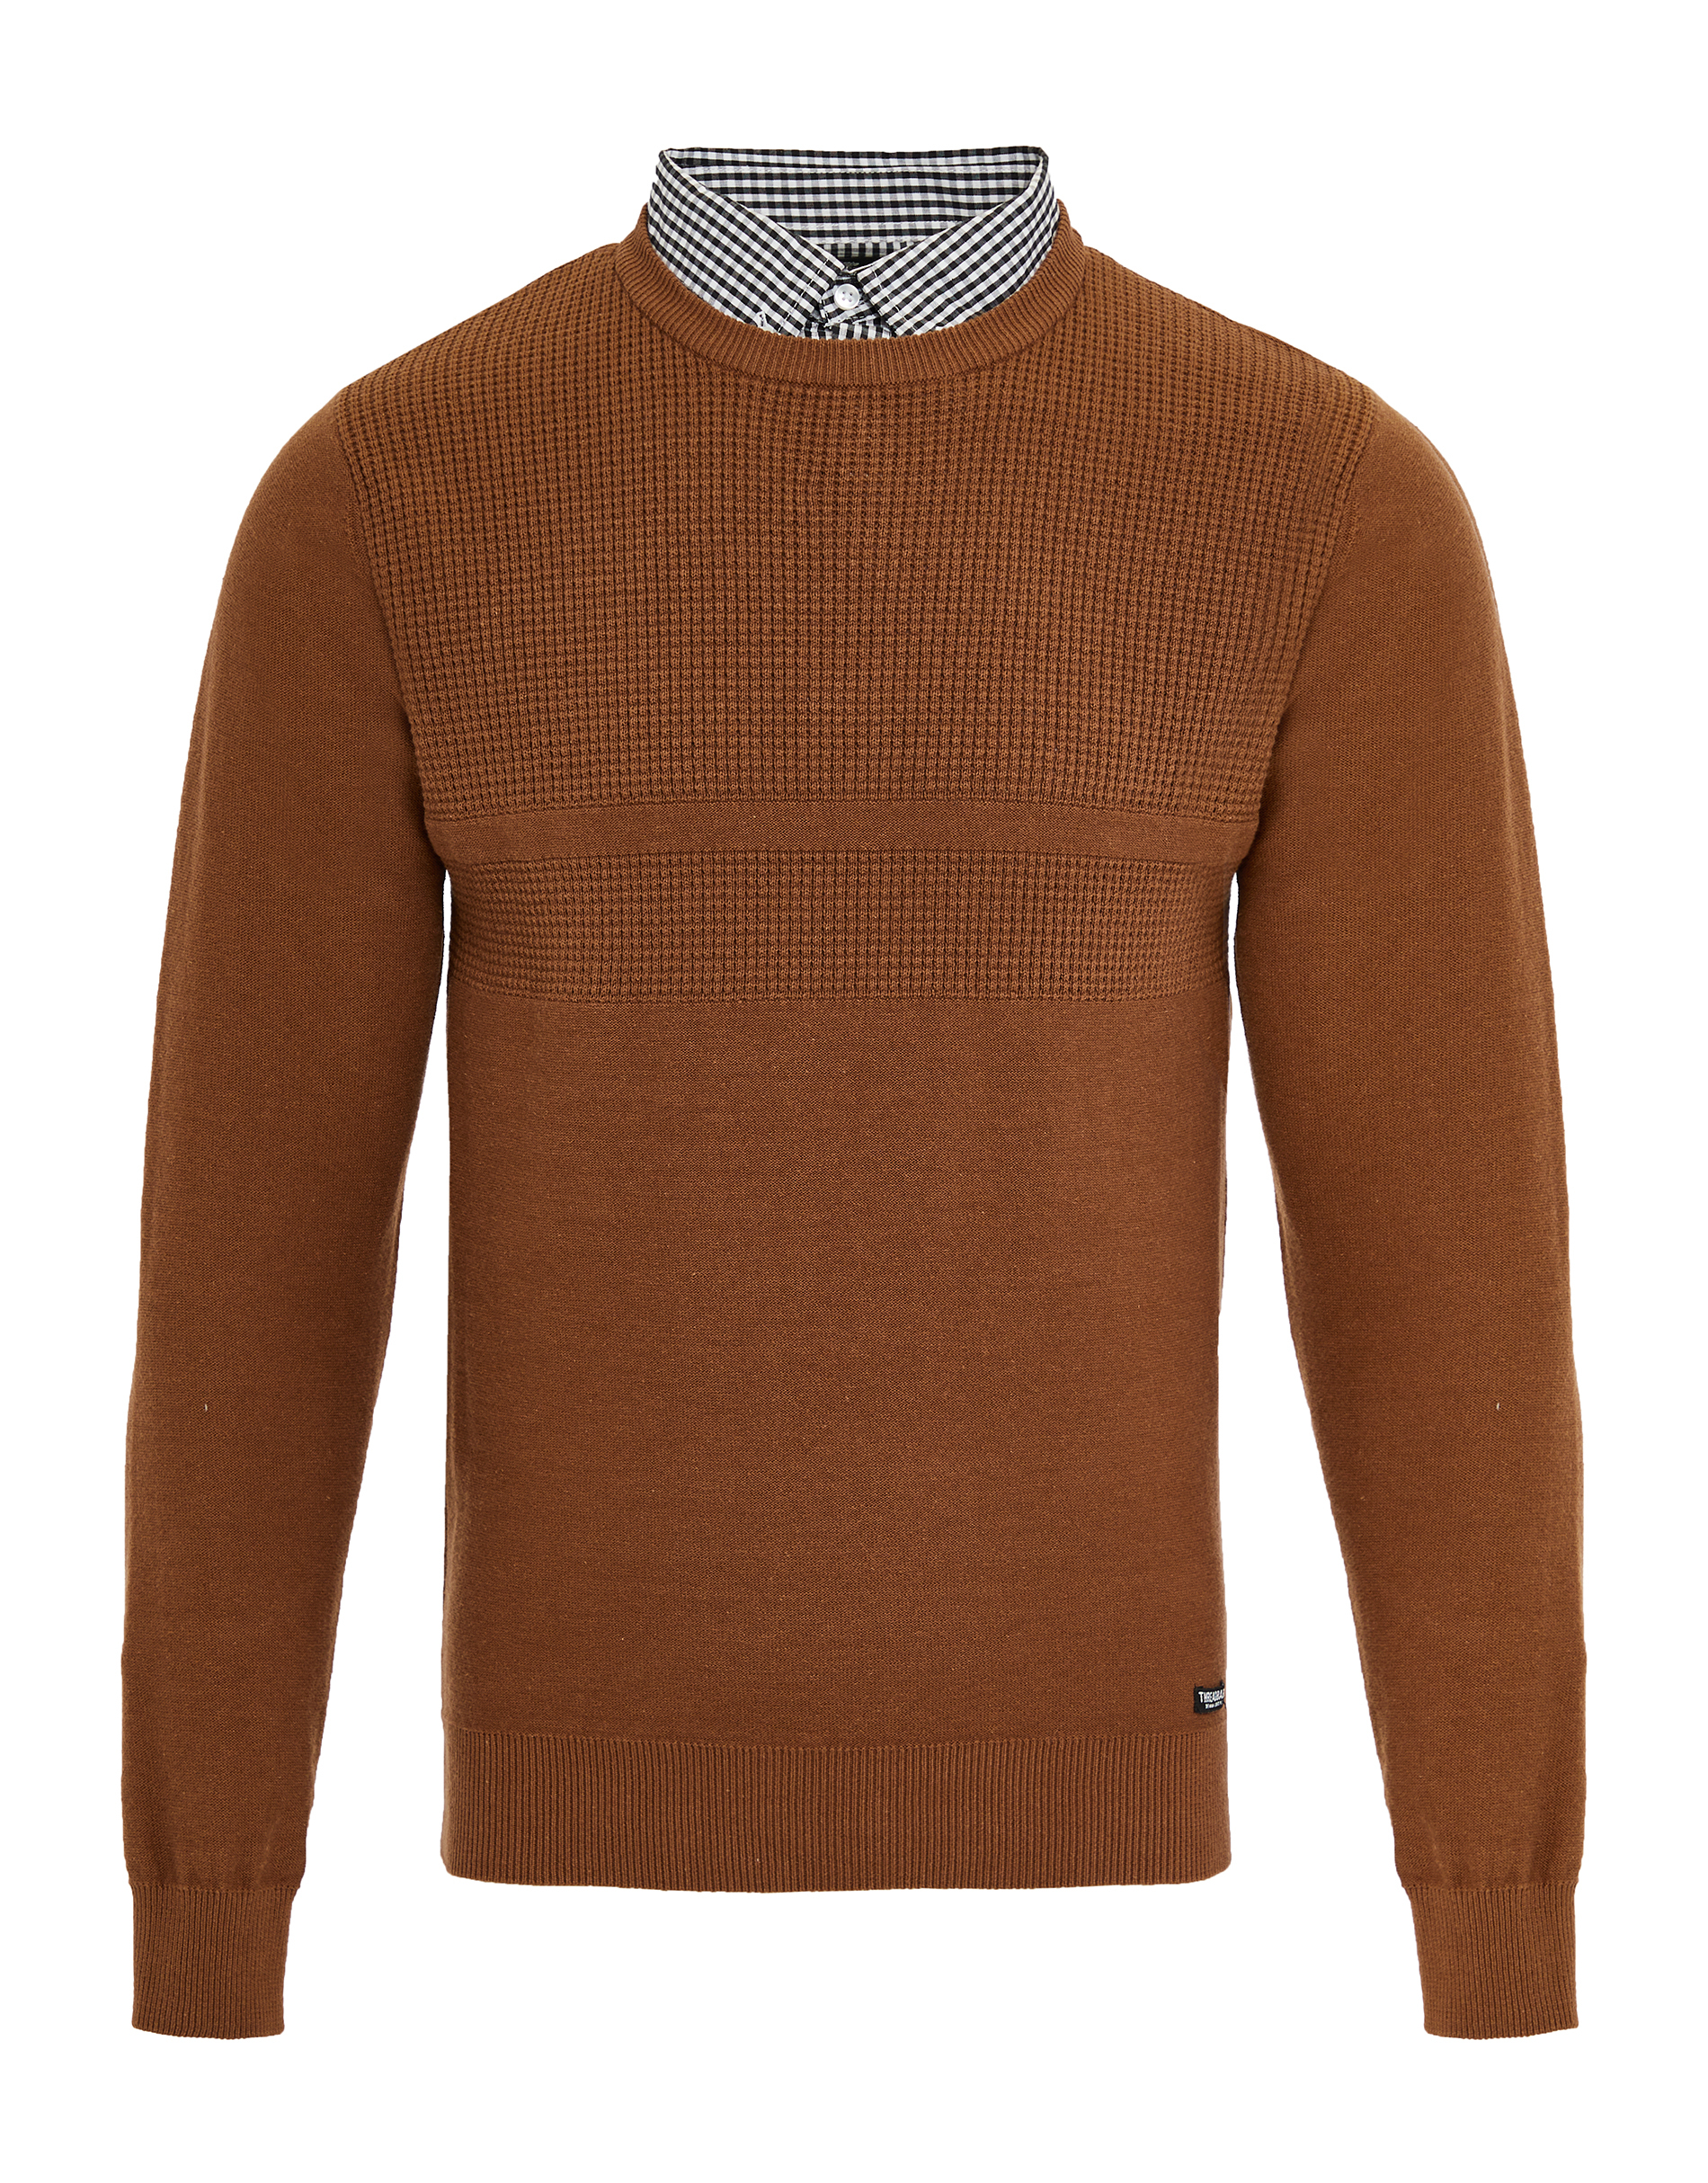 Пуловер Threadbare Strick THB Jumper Andy, коричневый пуловер threadbare strick reed черный